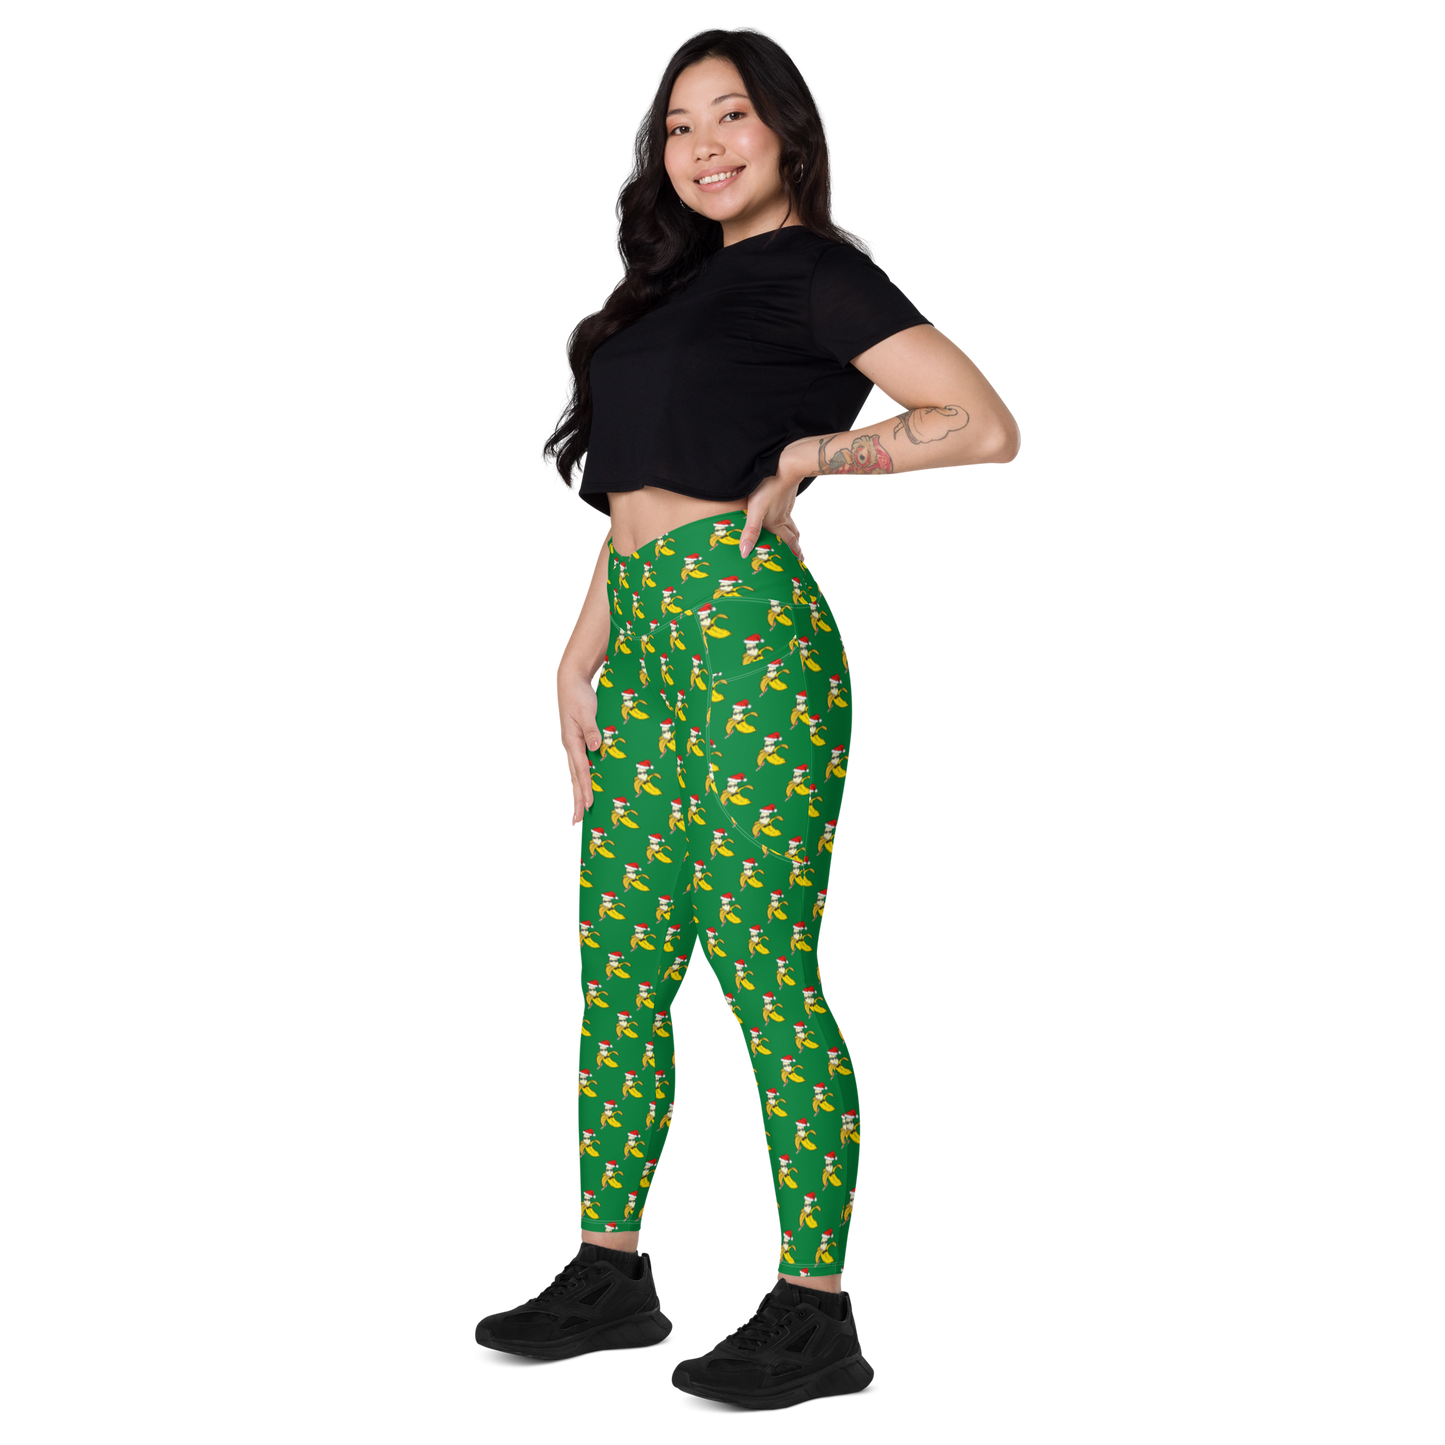 Jolly Green Banana Crossover leggings with pockets